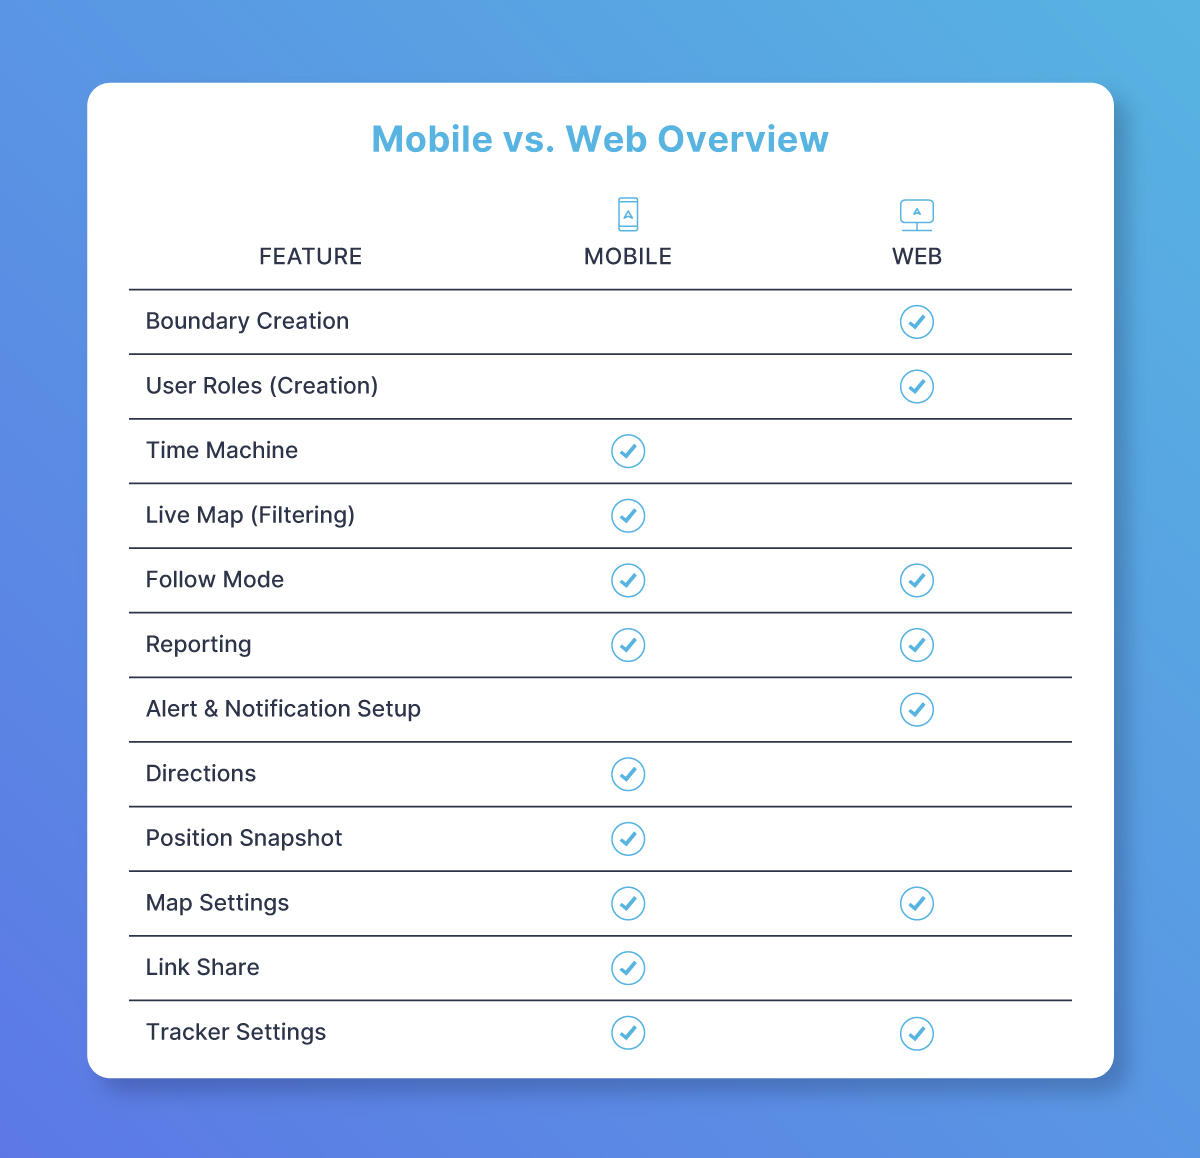 Checklist_Web-vs-Mobile_FINAL.jpg